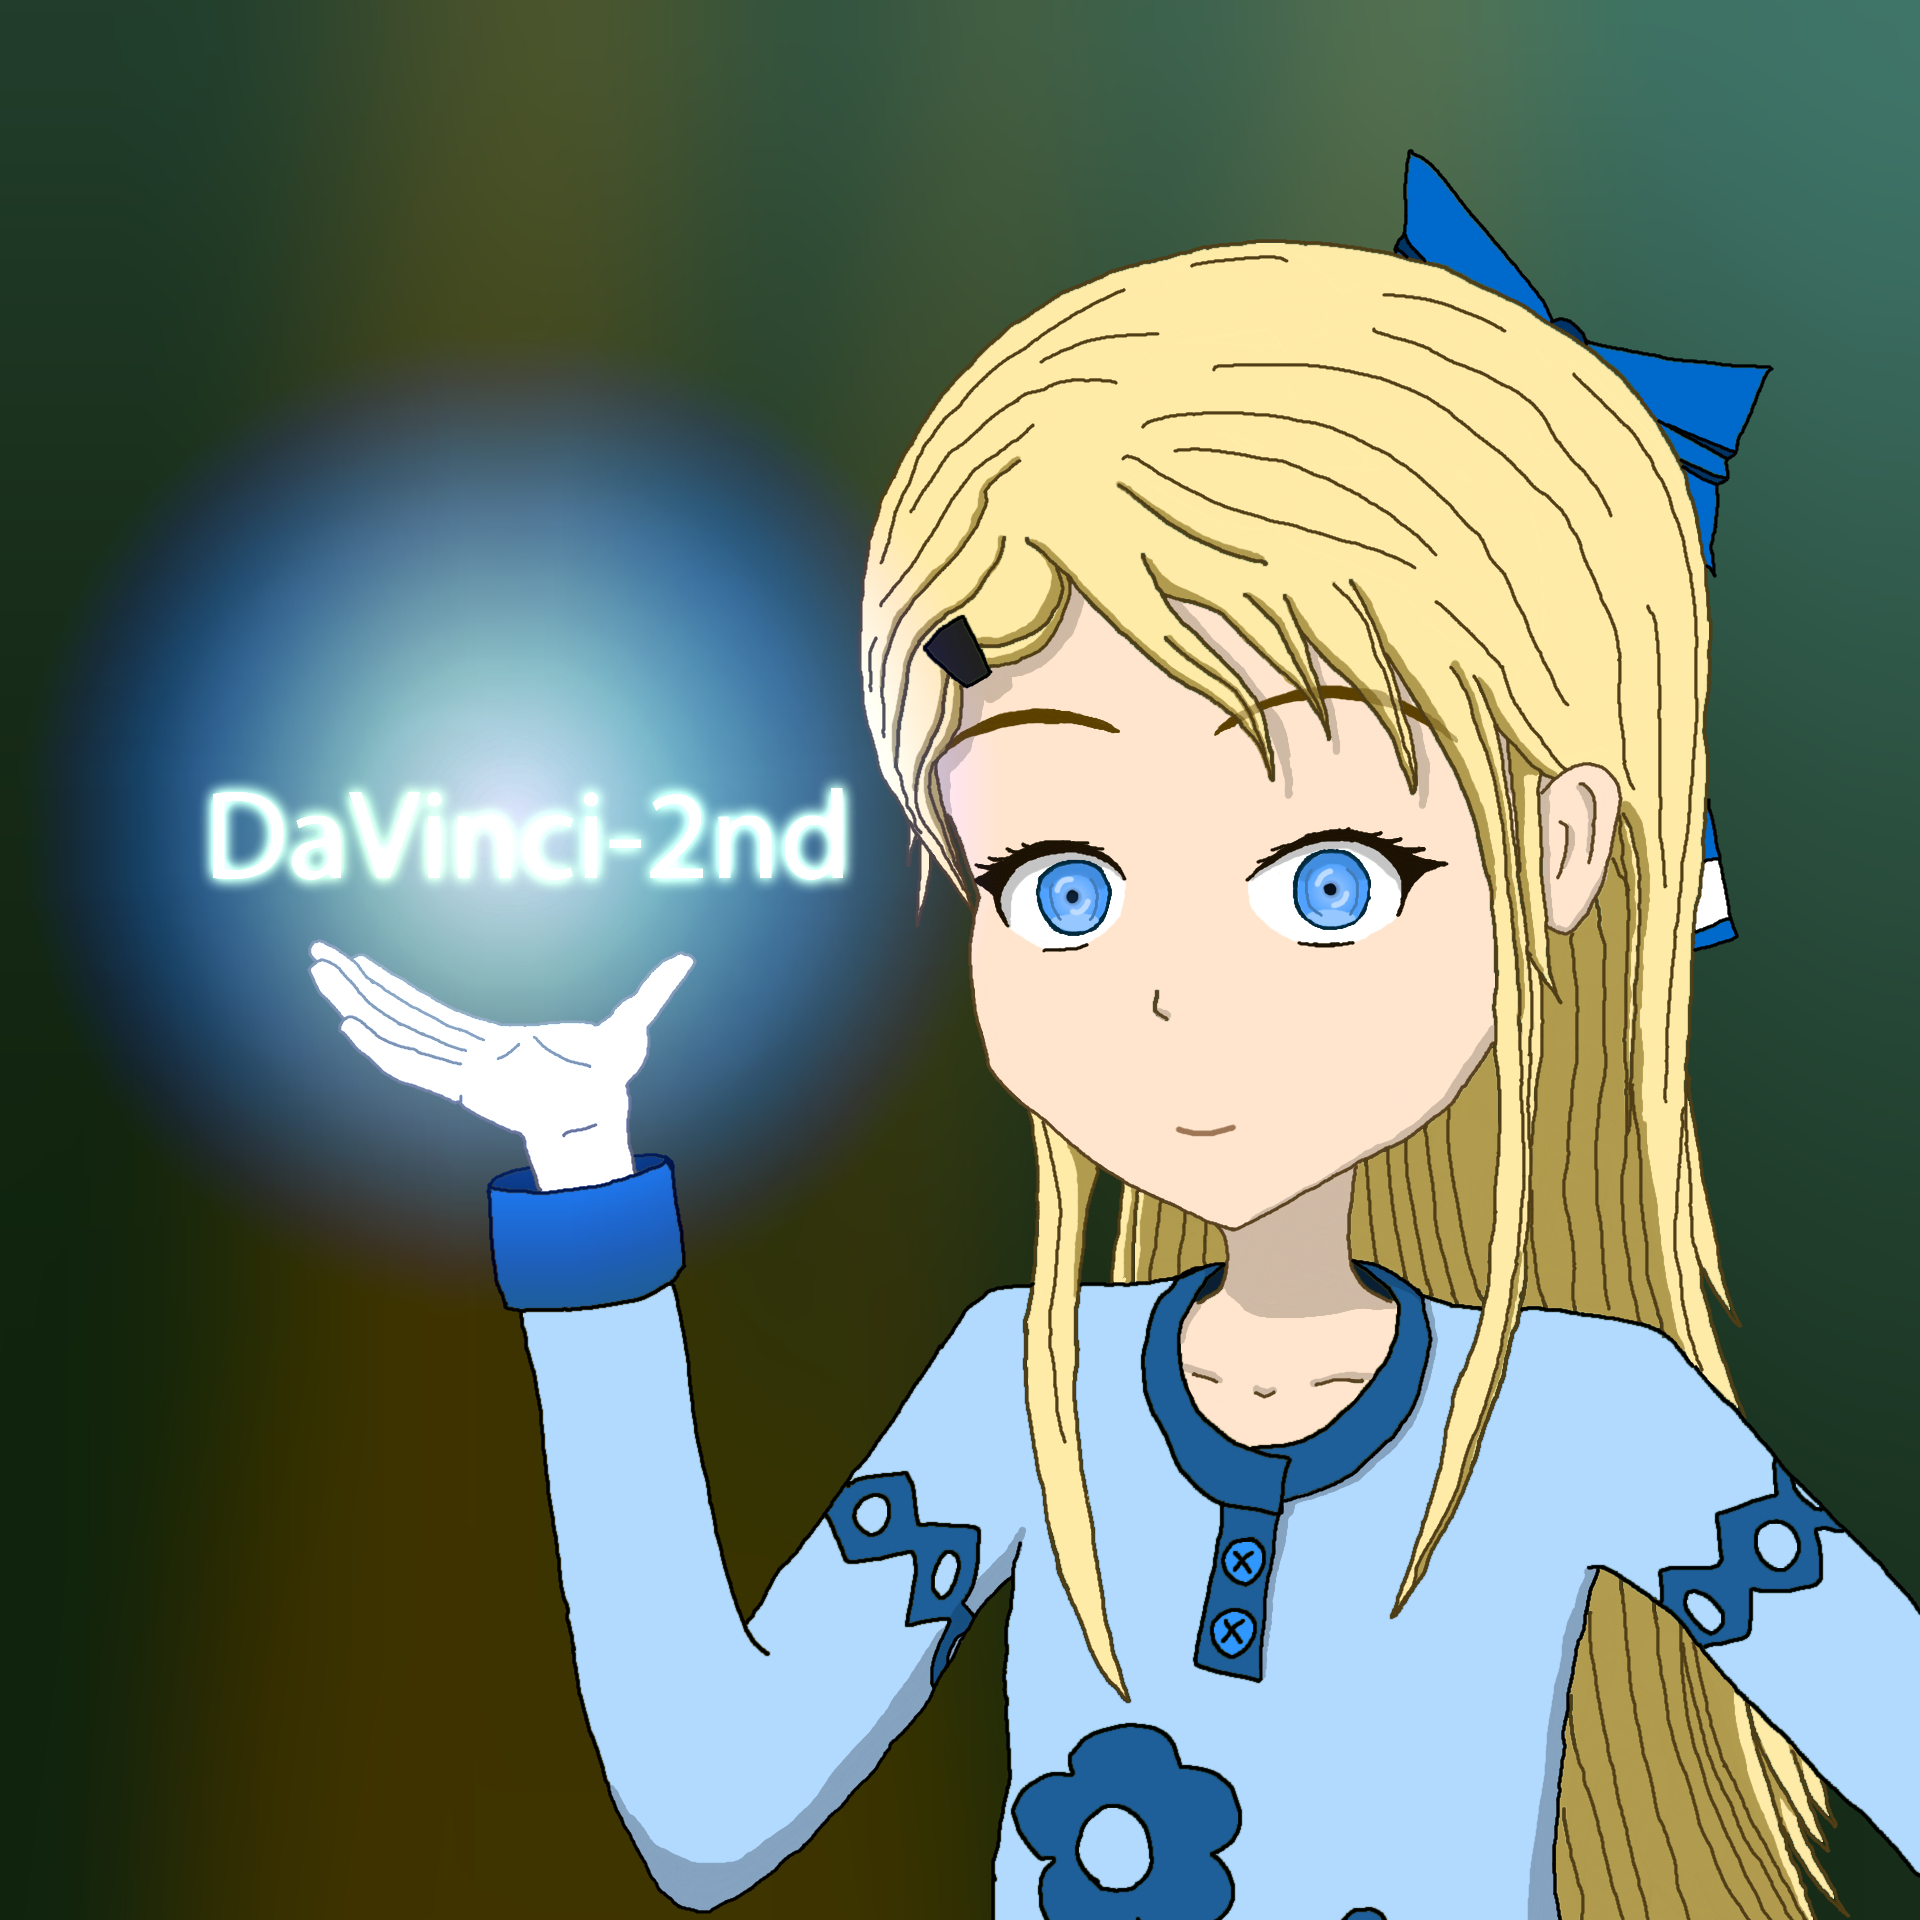 DaVinci-2nd